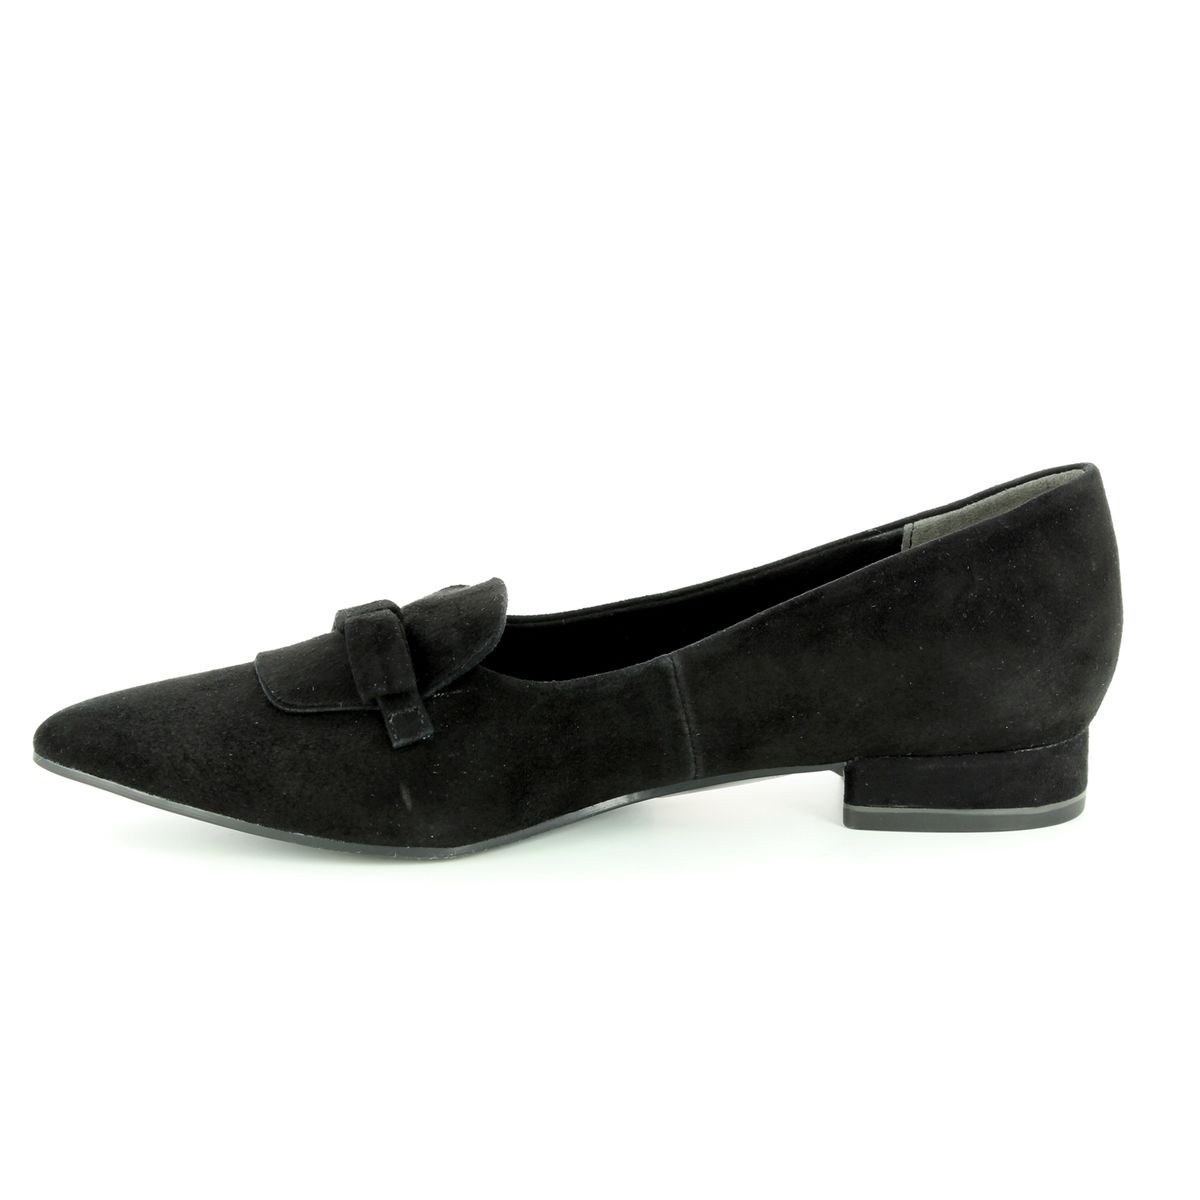 Tamaris Solace 24200-21-001 Black suede heeled shoes